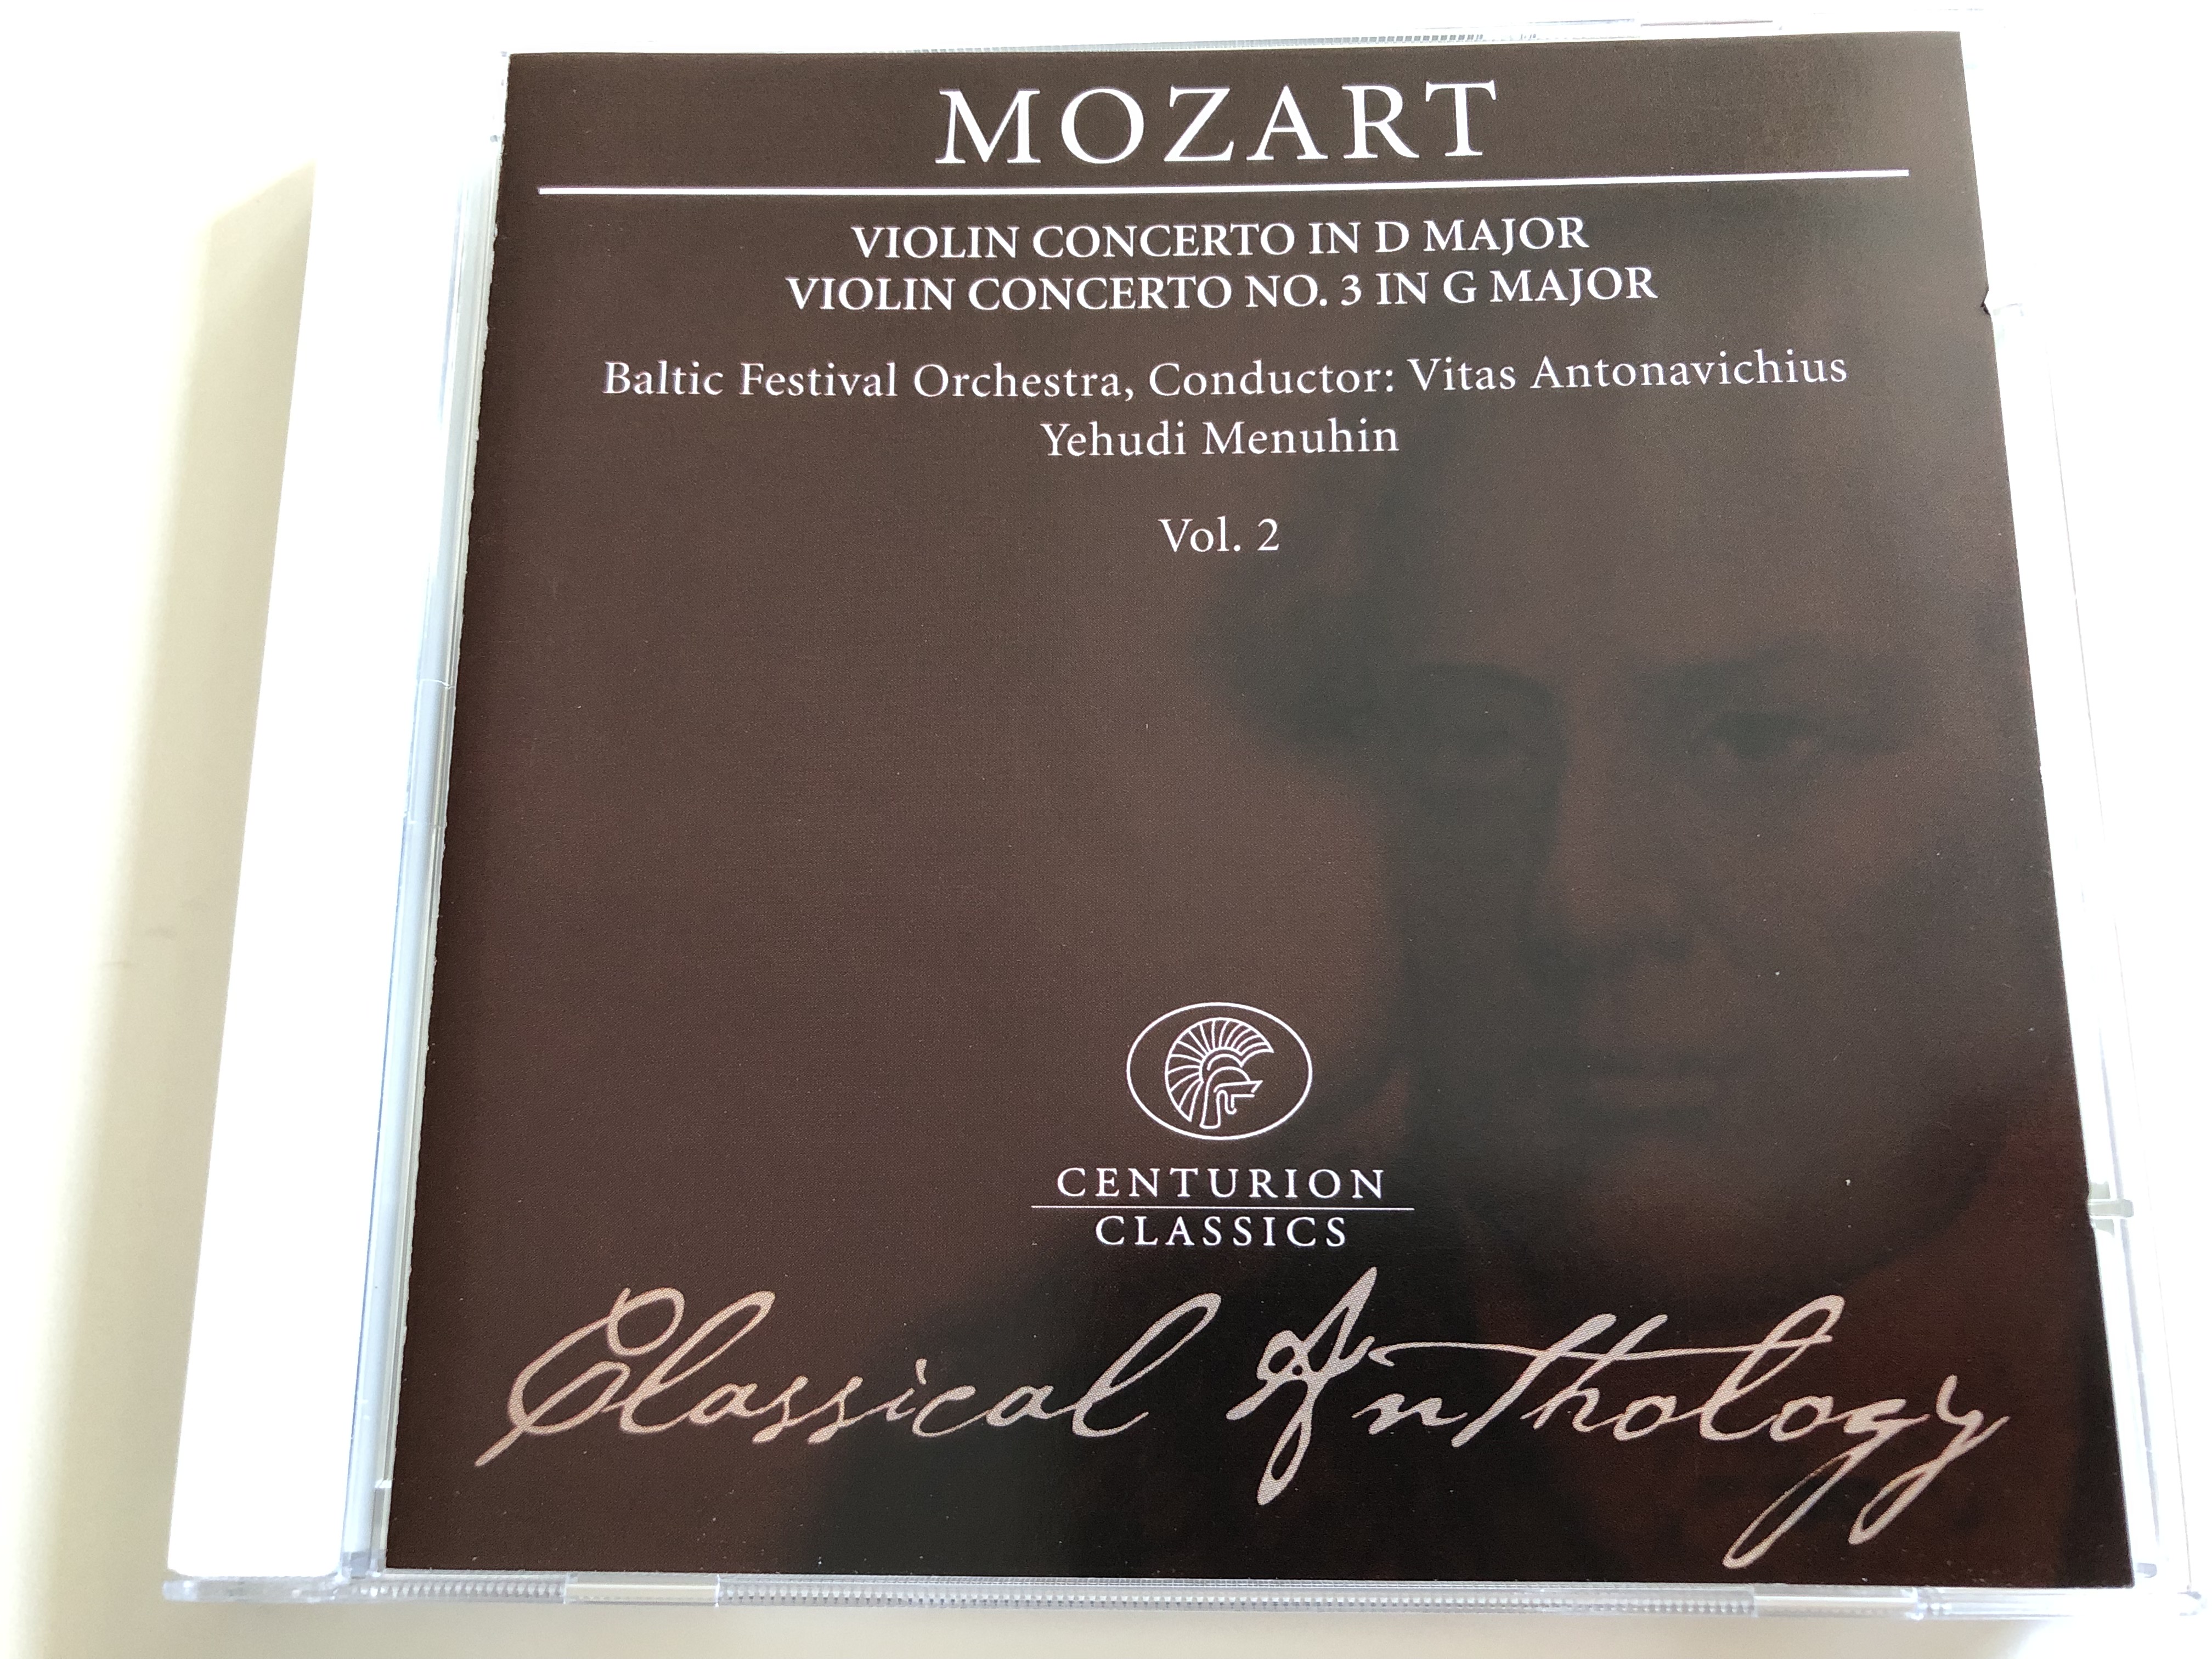 mozart-violin-concerto-in-d-major-violin-concerto-no.-3-in-g-major-baltic-festival-orchestra-conductor-vitas-antonavichius-yehudi-menuhin-vol.-2-classical-anthology-centurion-classics-aud-1-.jpg